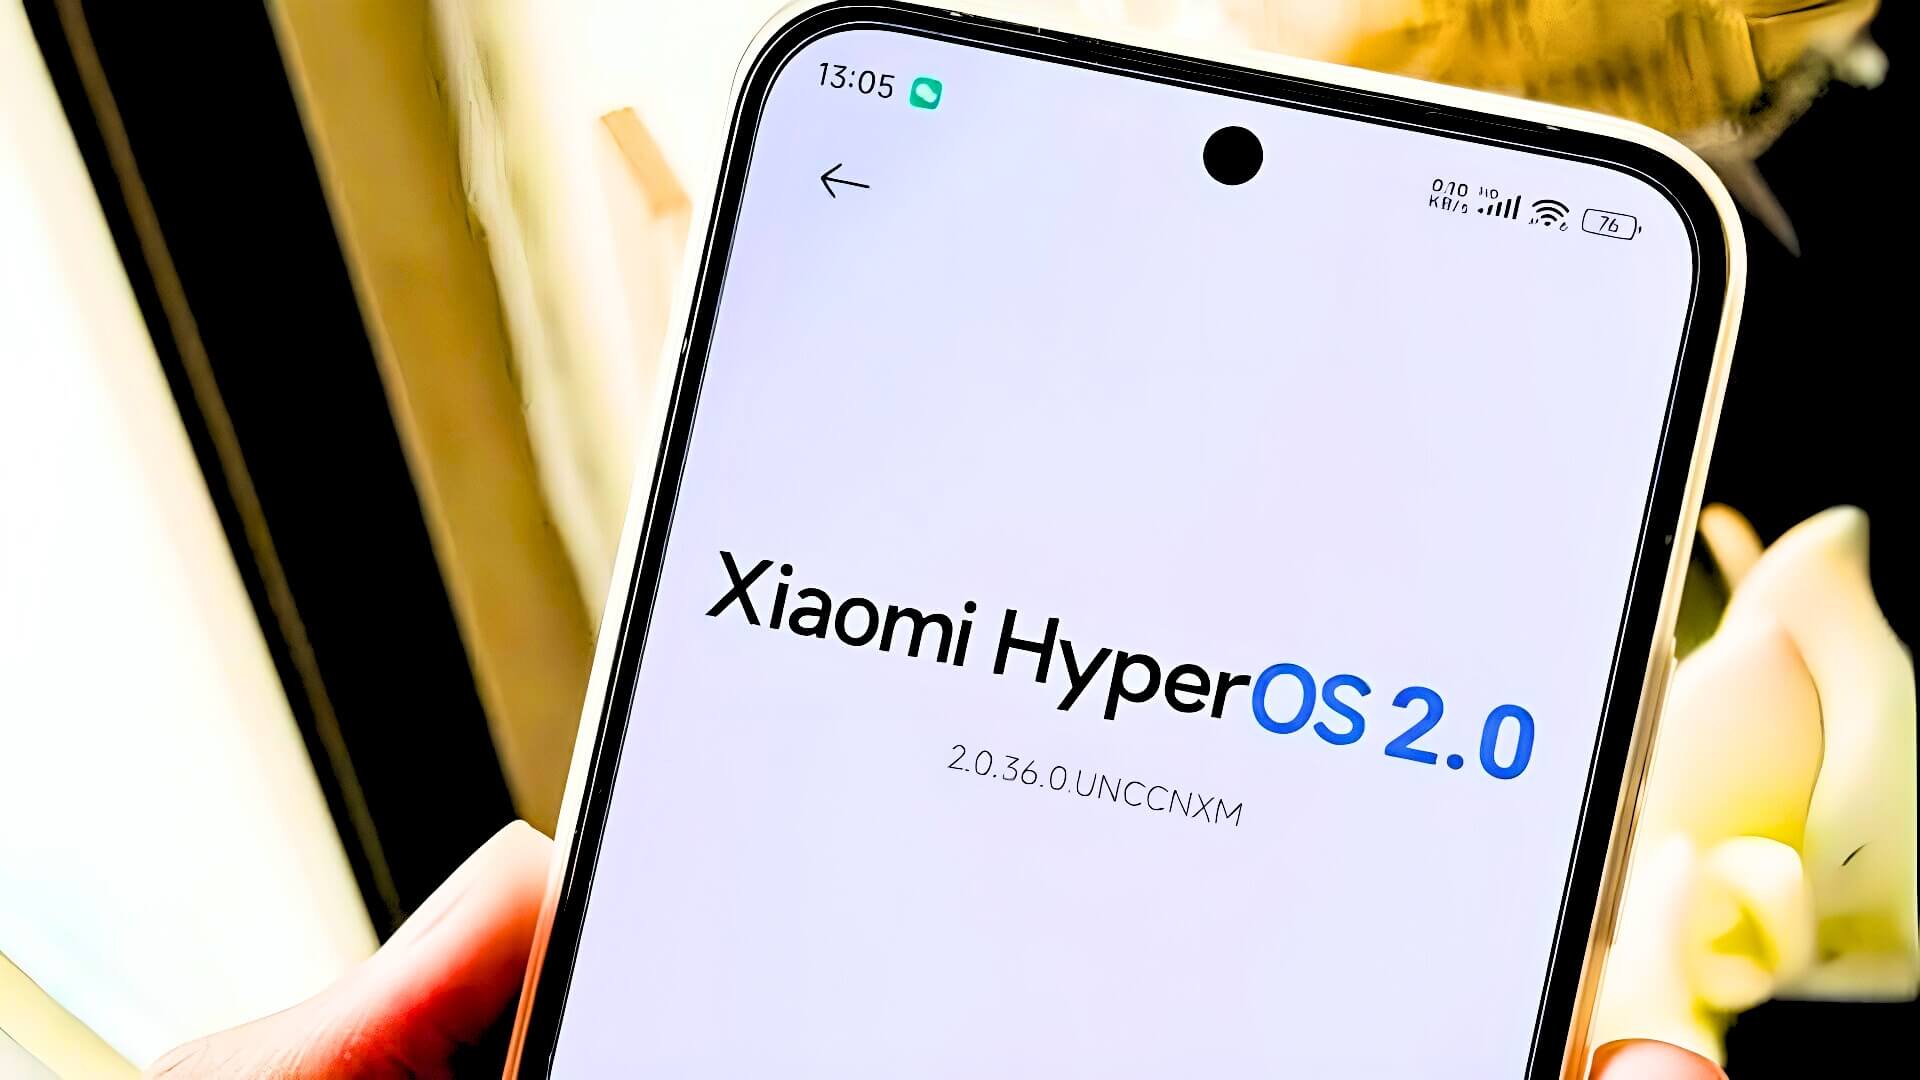 HyperOS 2.0 Update